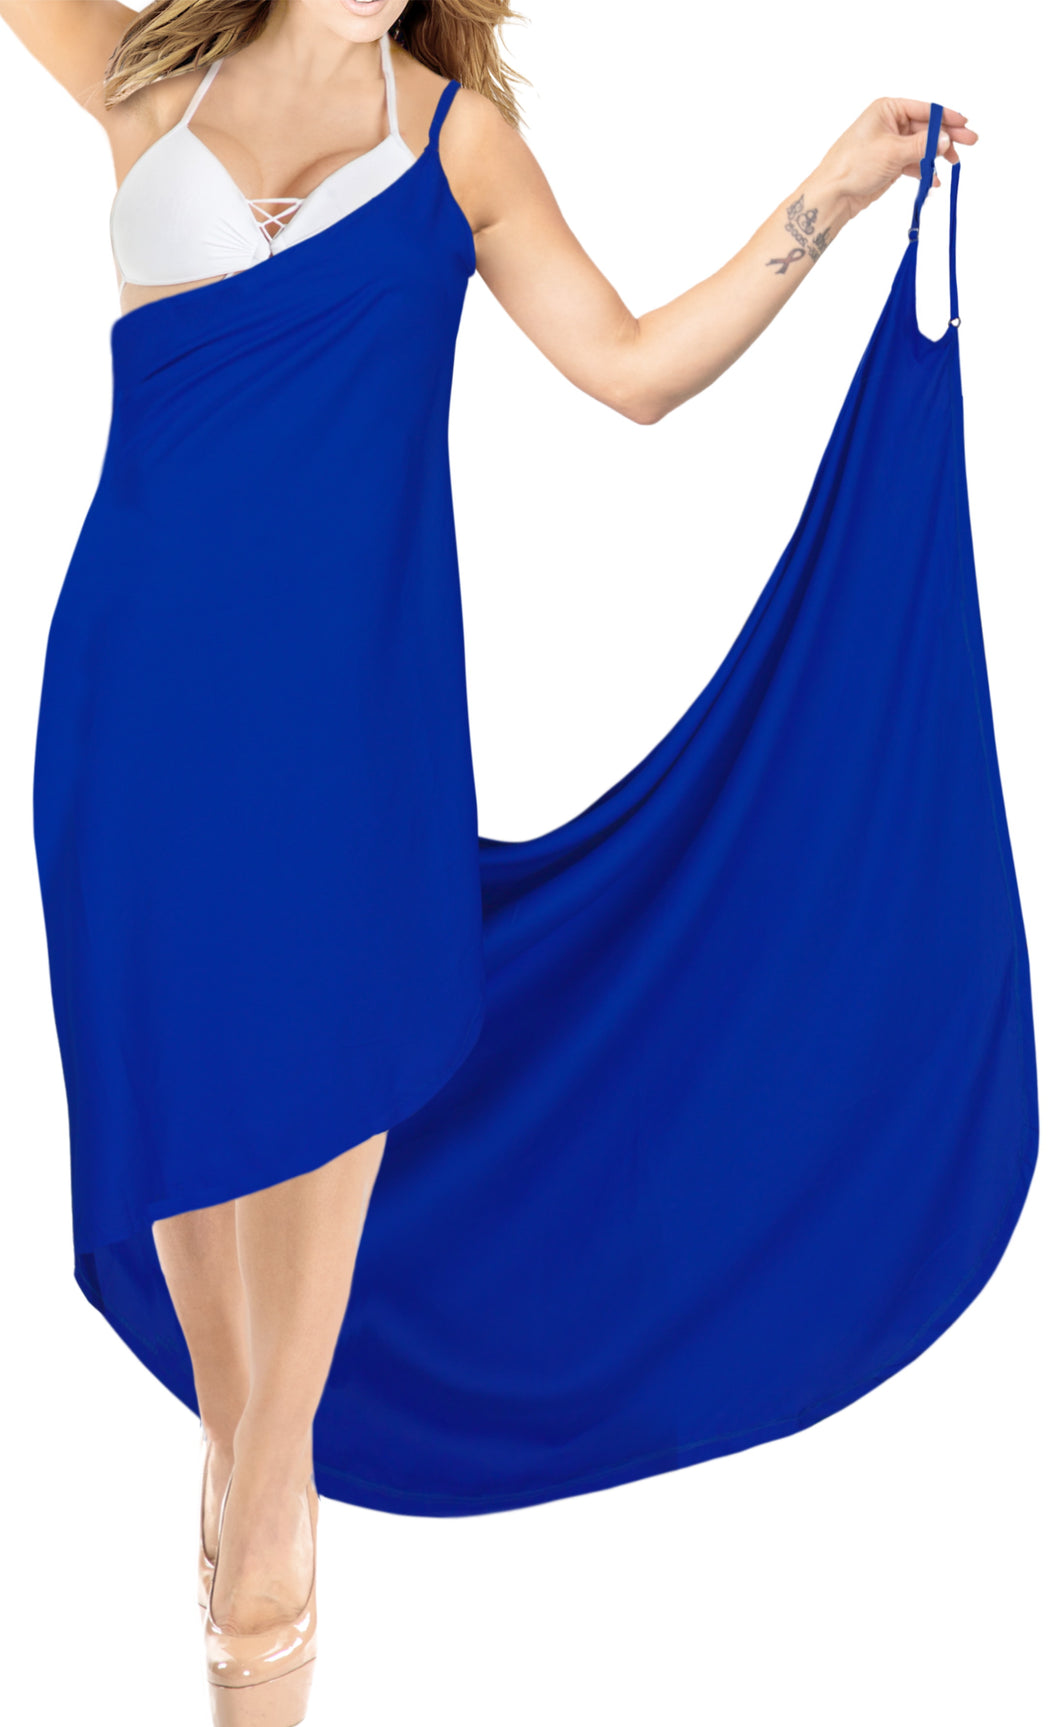 la-leela-rayon-bathing-towel-Women's-Sarong-Swimsuit-Cover-Up-Summer-Beach-Wrap-Skirt-Full-Long-Blue_A302